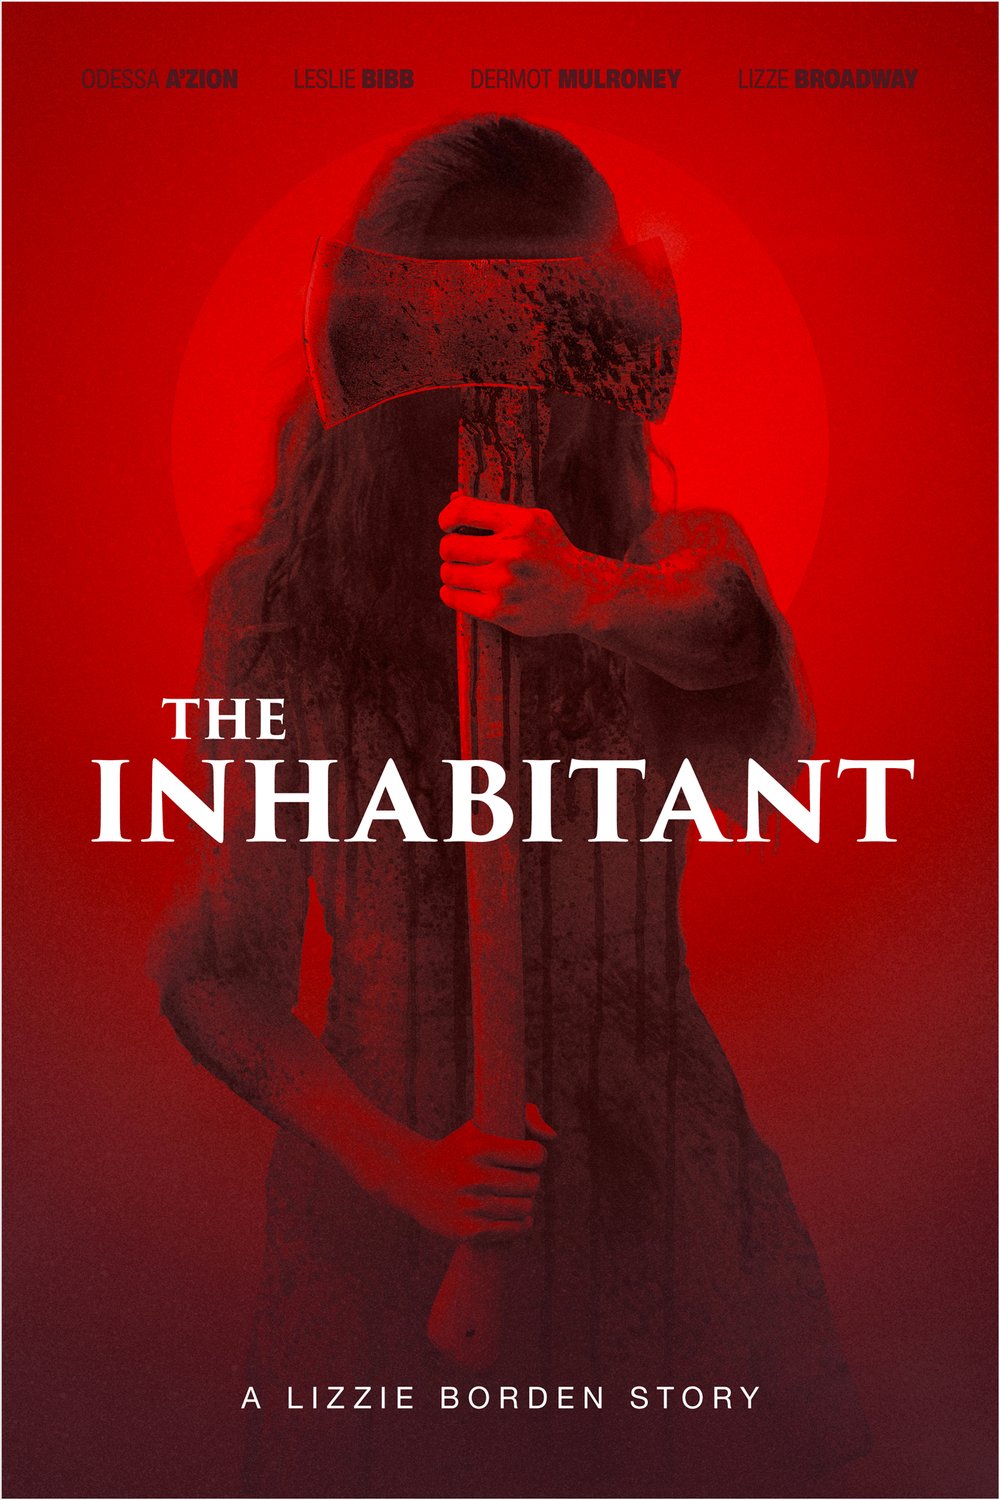 L'affiche du film The Inhabitant